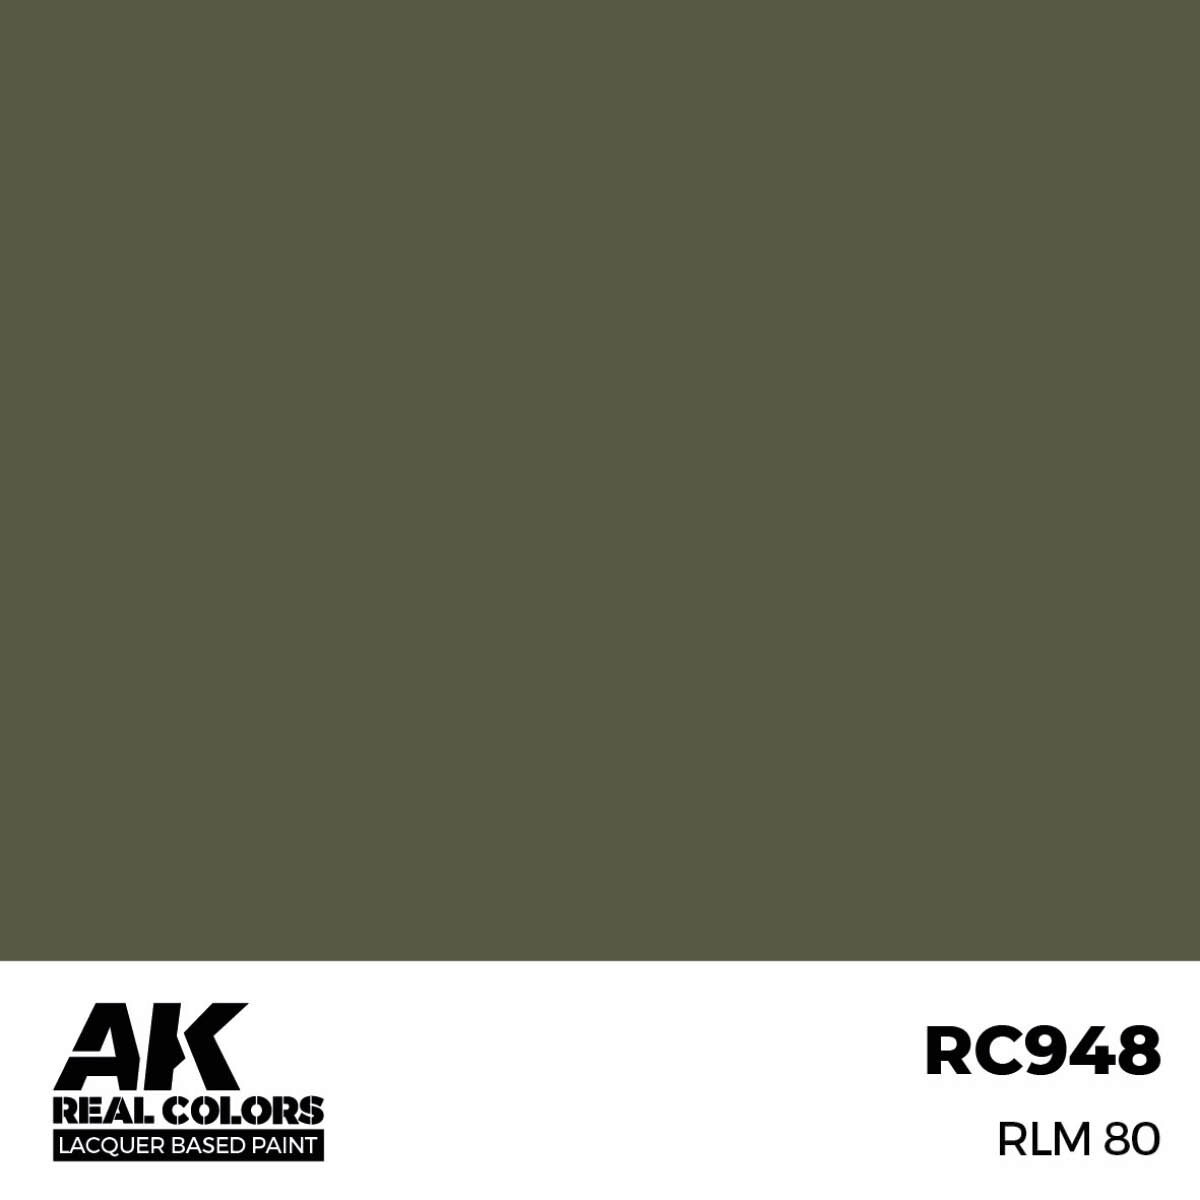 AK RC948 Real Colors RLM 80 17 ml.